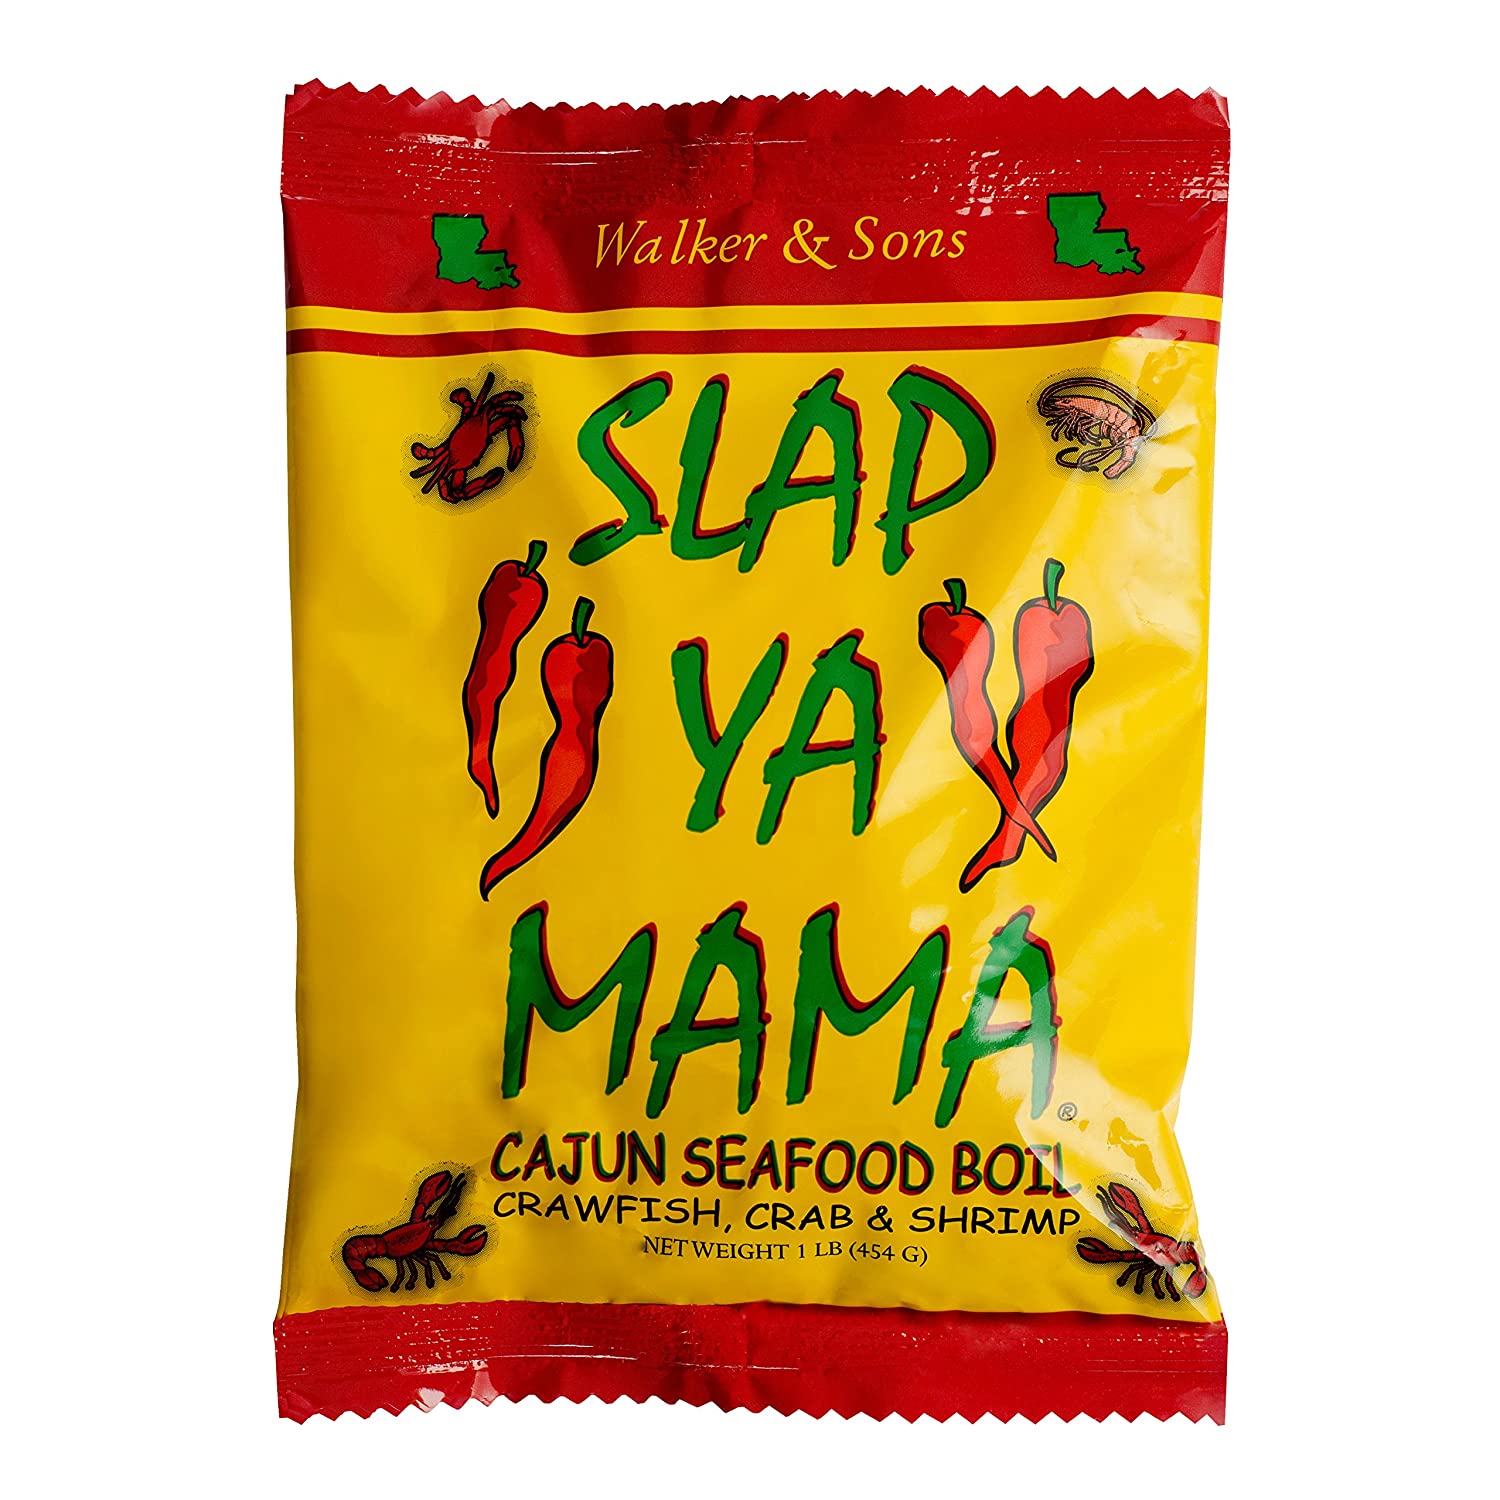 Slap Ya Mama: A Spice for All Seasons